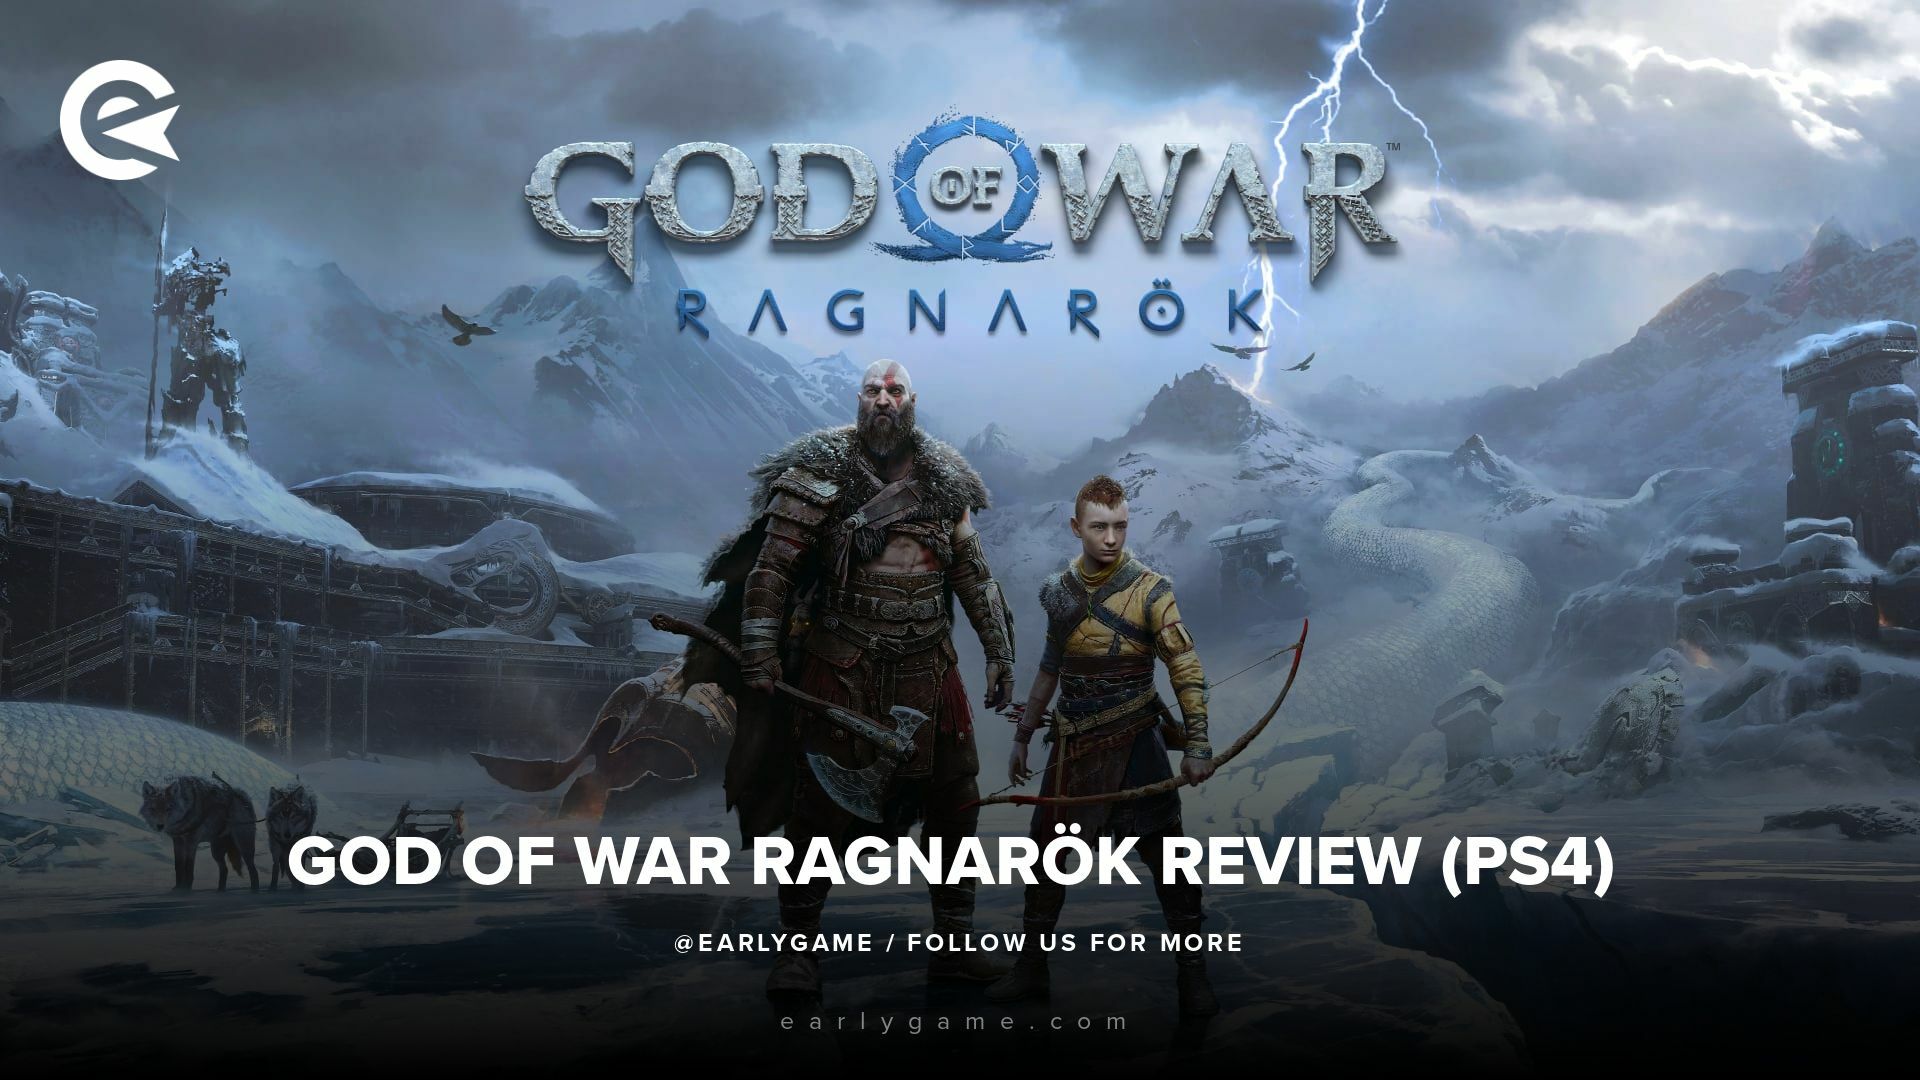 God of war ragnarok review